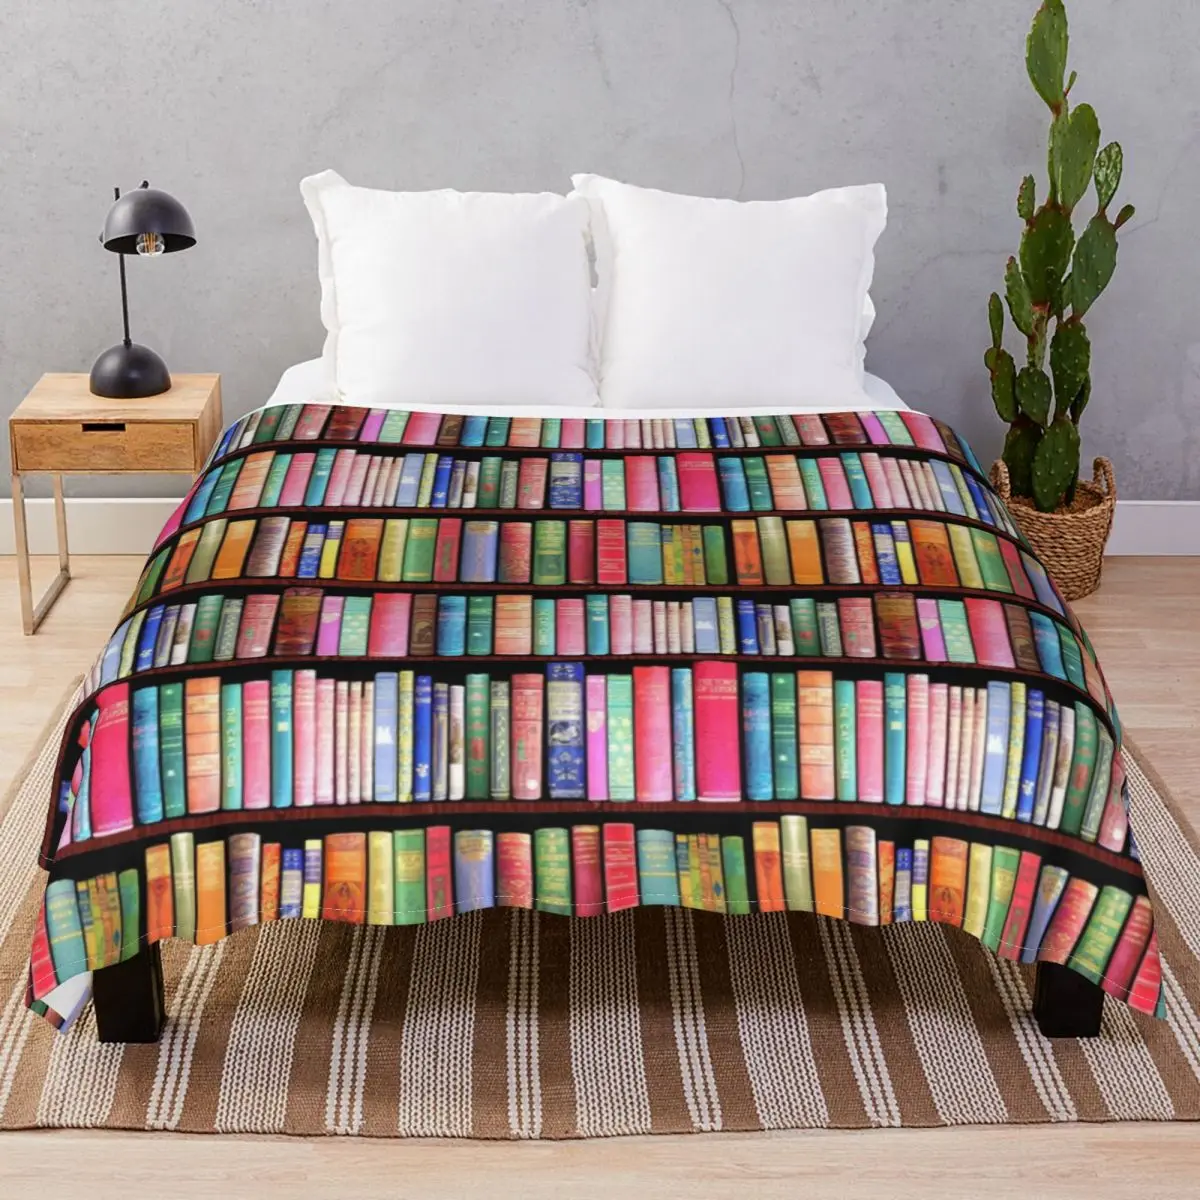 Vintage Book Shelf Blankets Fleece Spring Autumn Super Soft Throw Blanket for Bed Home Couch Travel Cinema